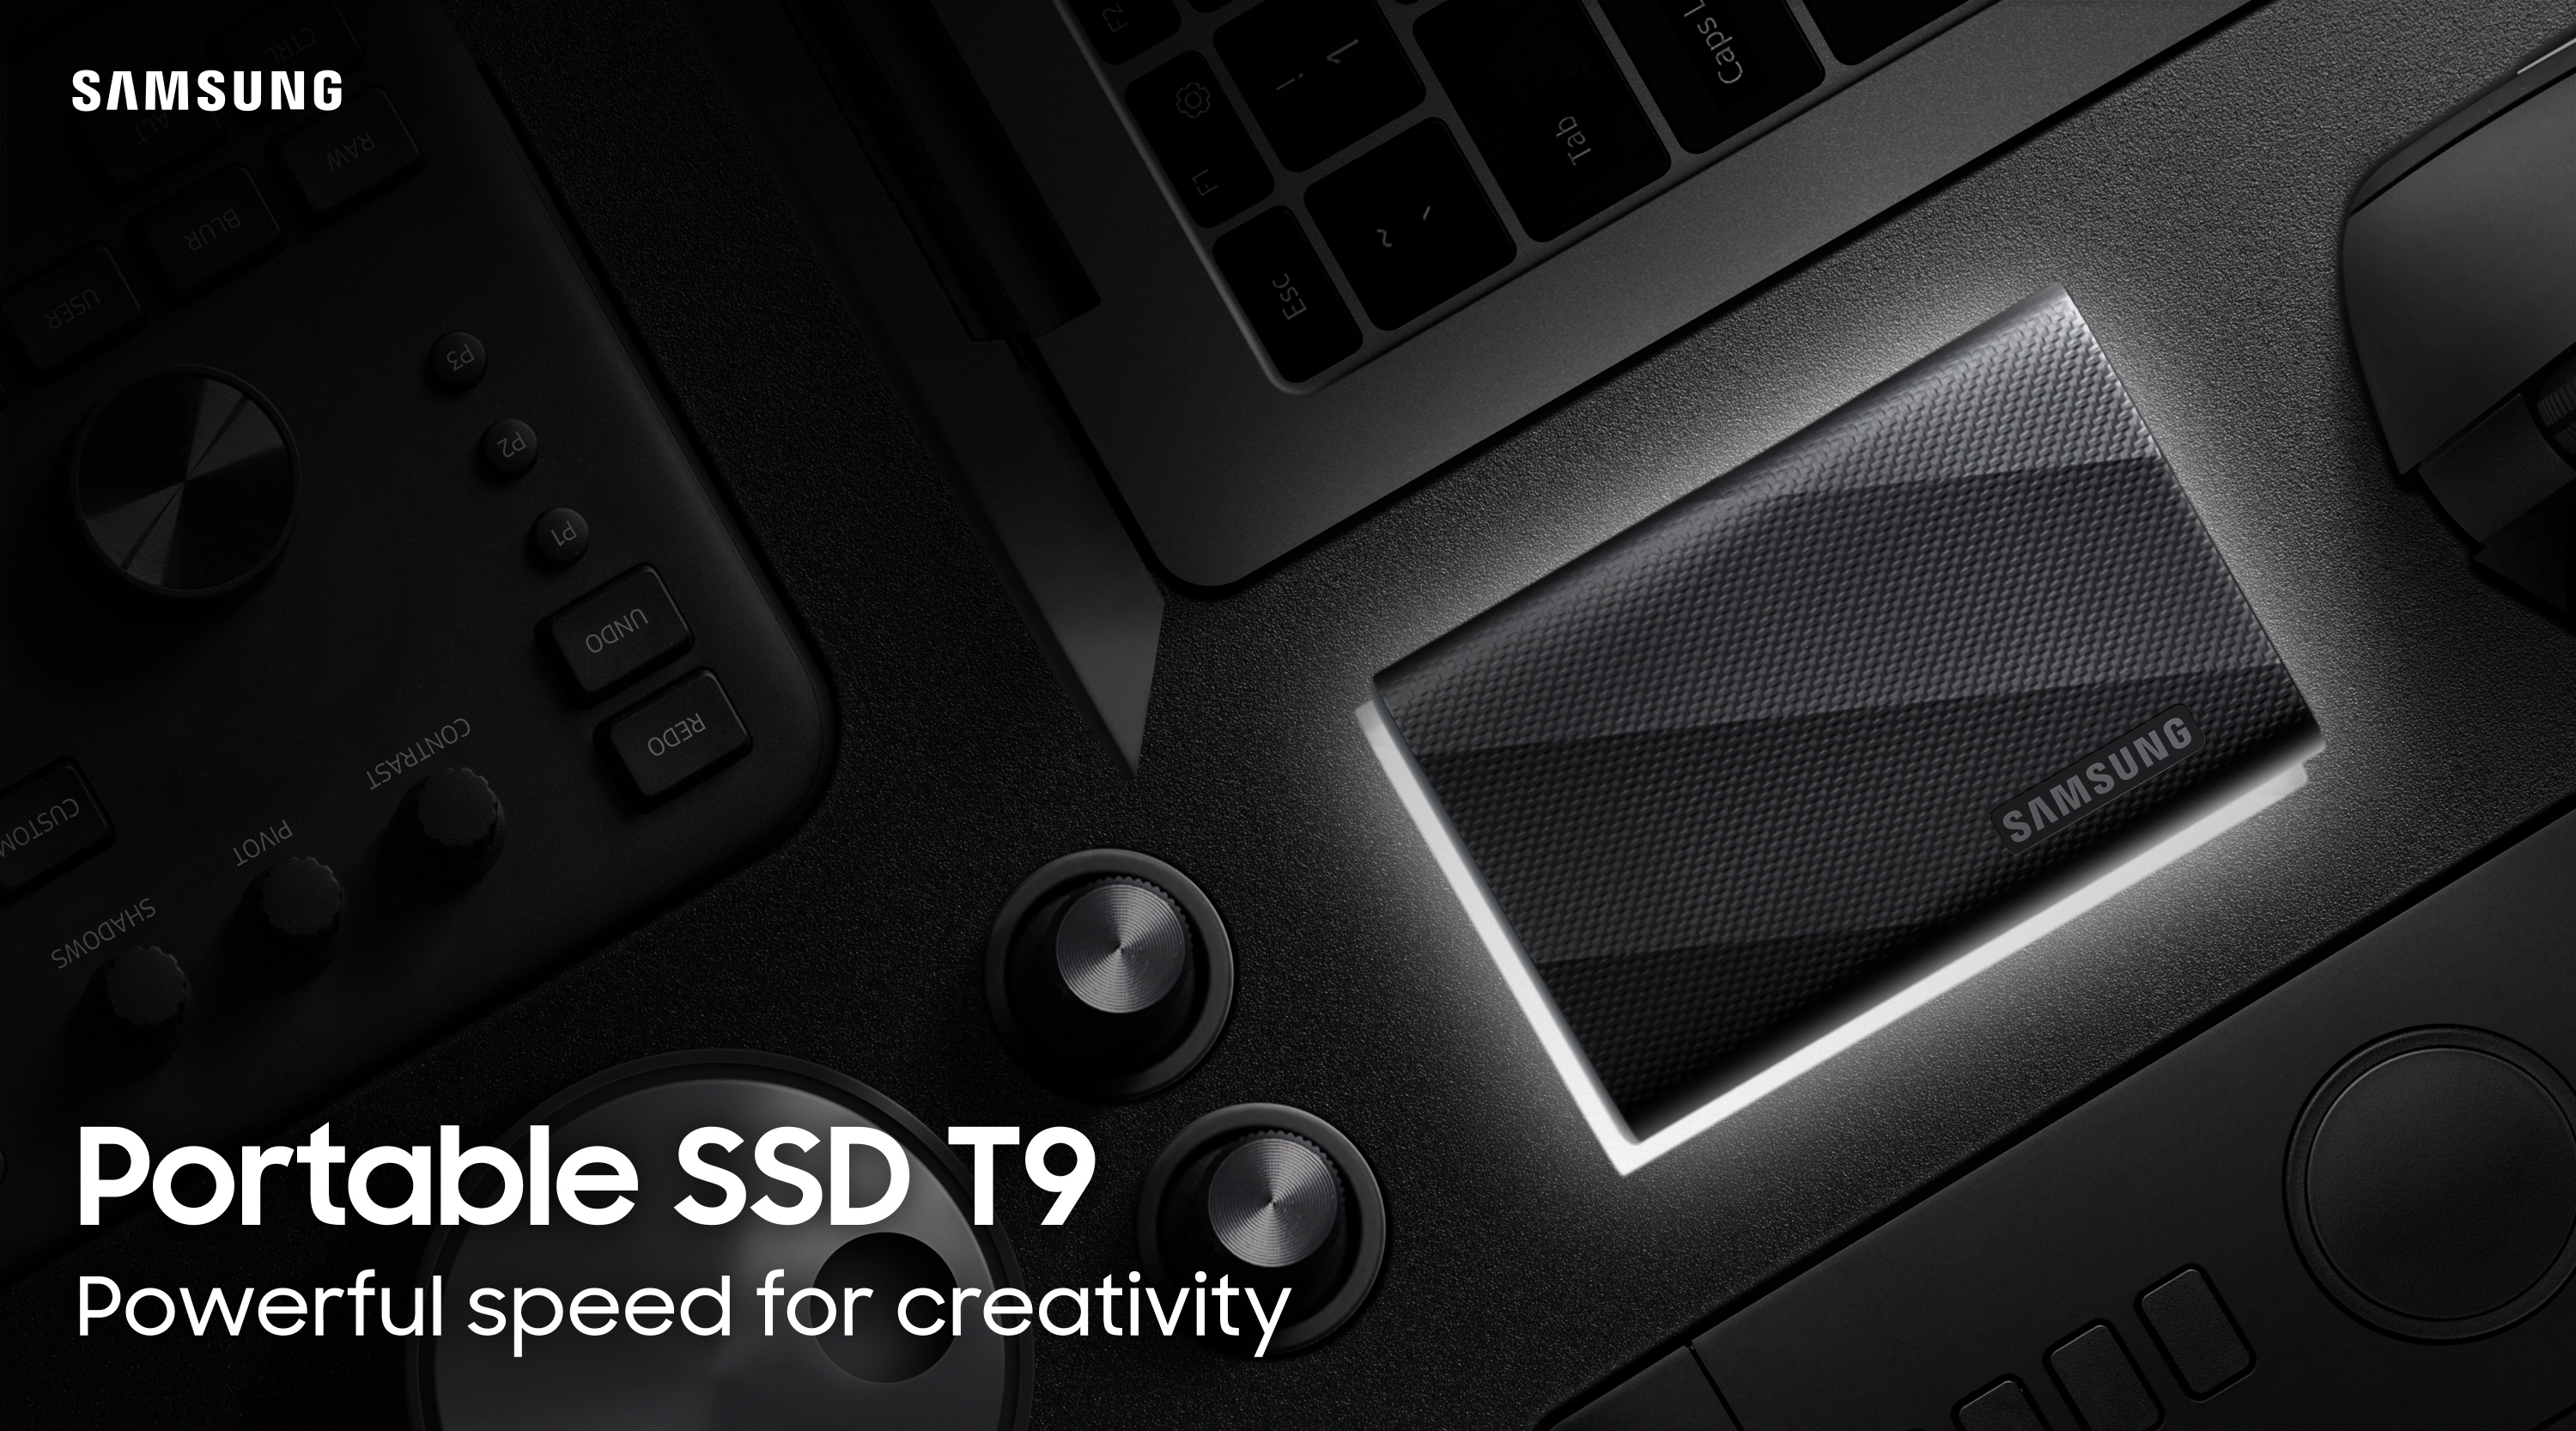 Samsung Portable SSD T9: tot 4TB opslagcapaciteit, USB 3.2 Gen 2×2 interface en leessnelheden tot 2000MB/sec